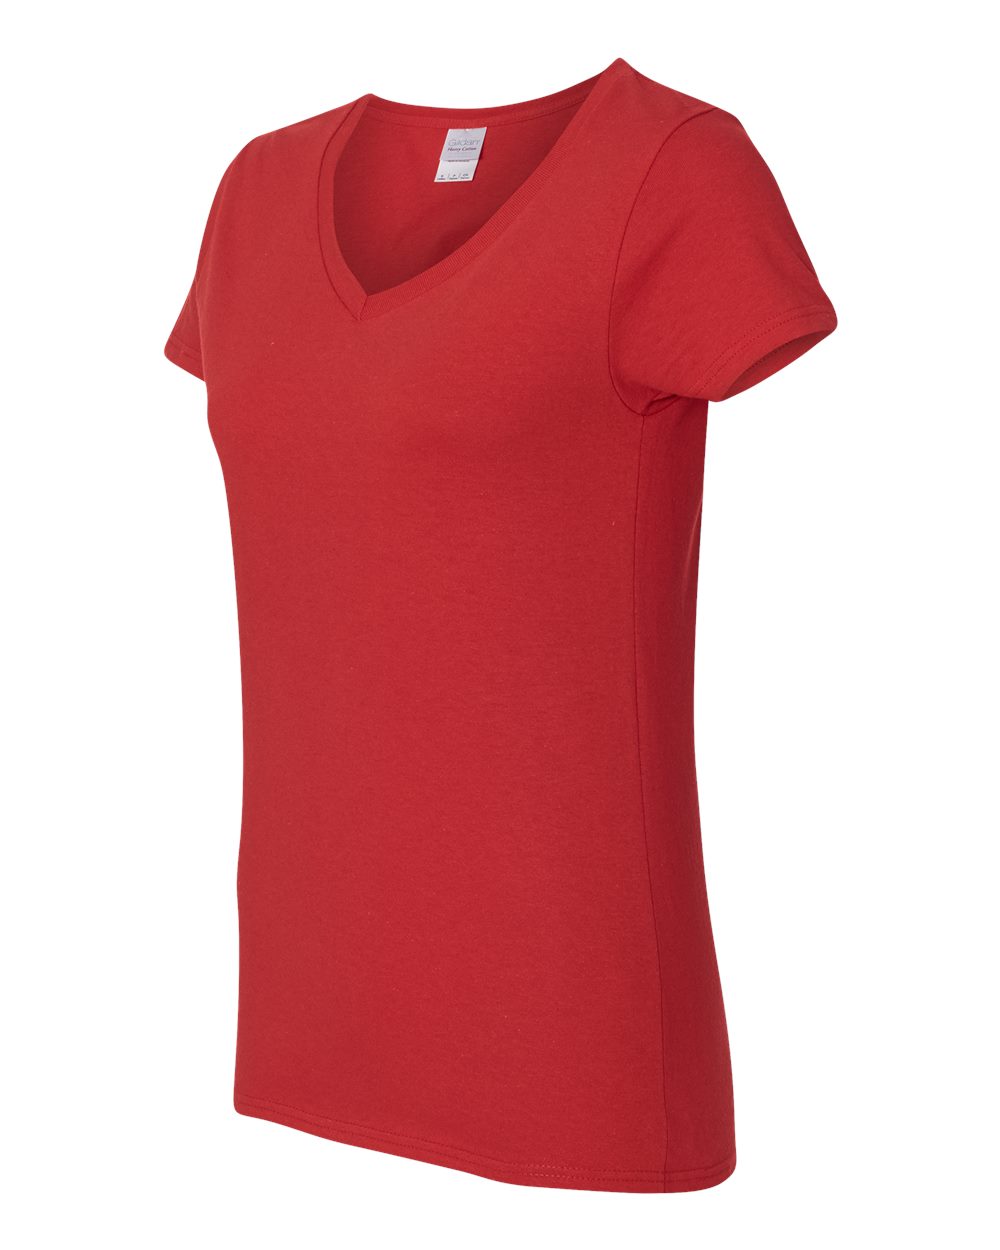 IWPF - Women's T-Shirt V-Neck Short Sleeve - Las Vegas Nevada - image 3 of 5